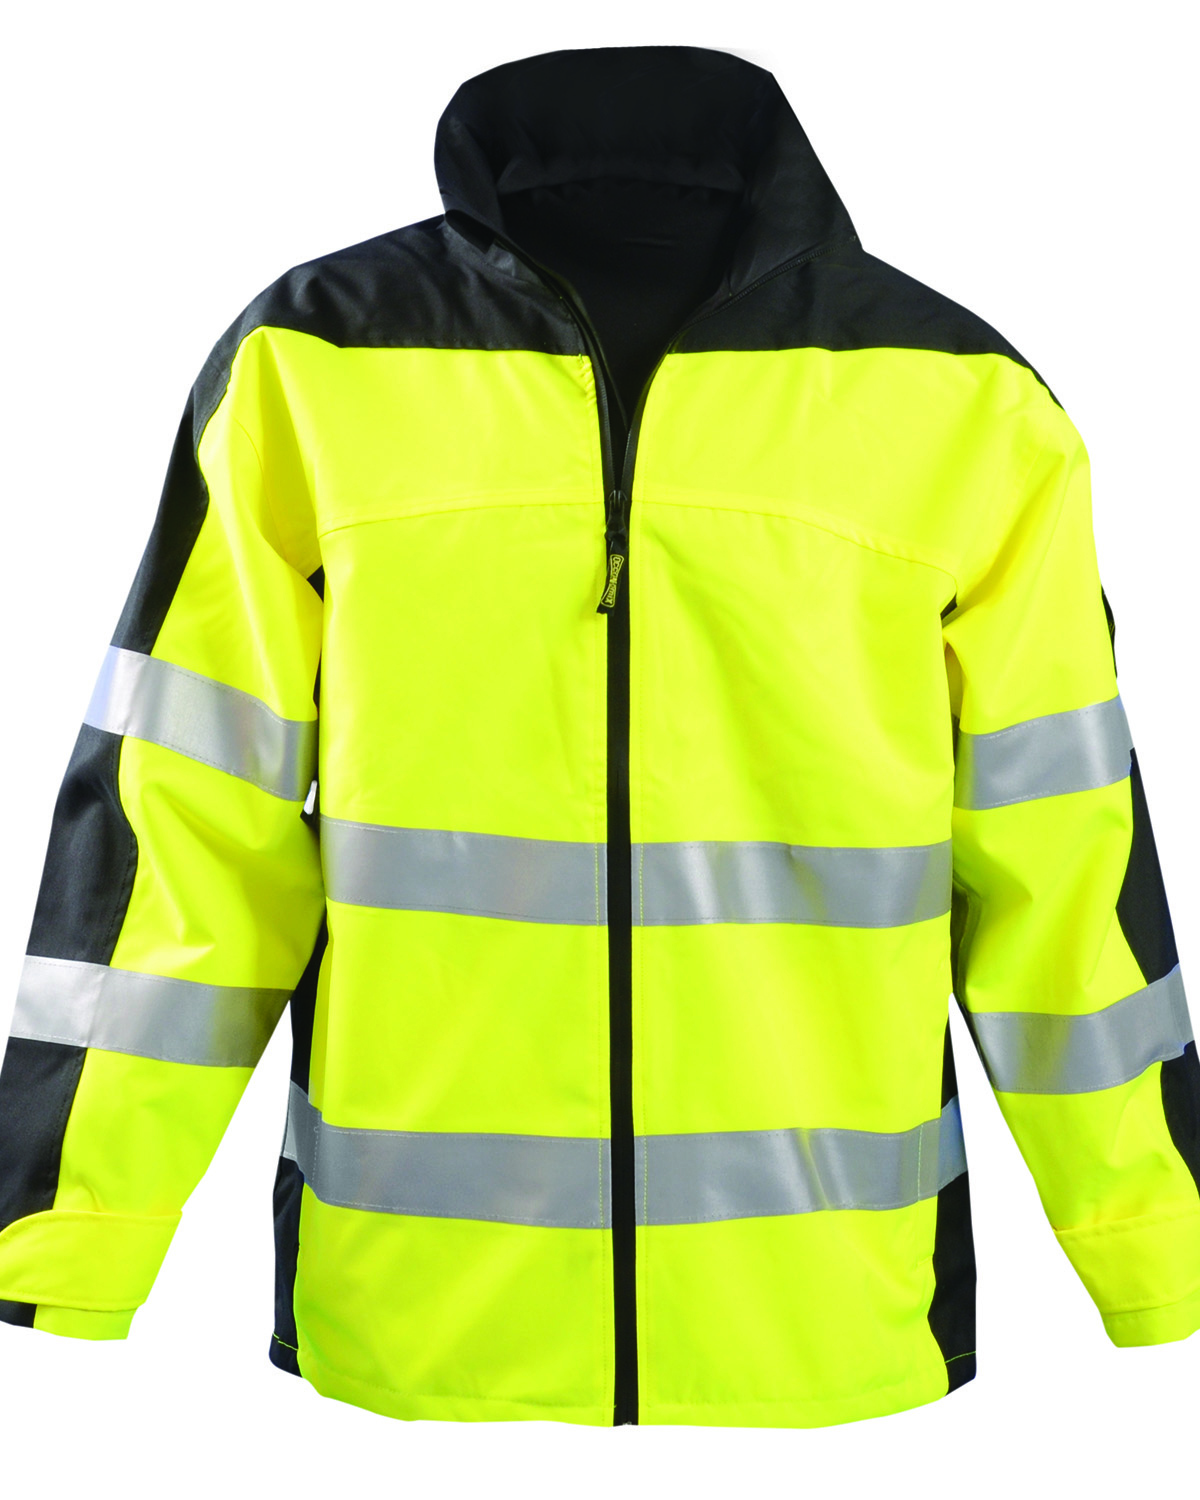 OccuNomix SPBRJ - Men's Speed Collection Premium Breathable Rain Jacket